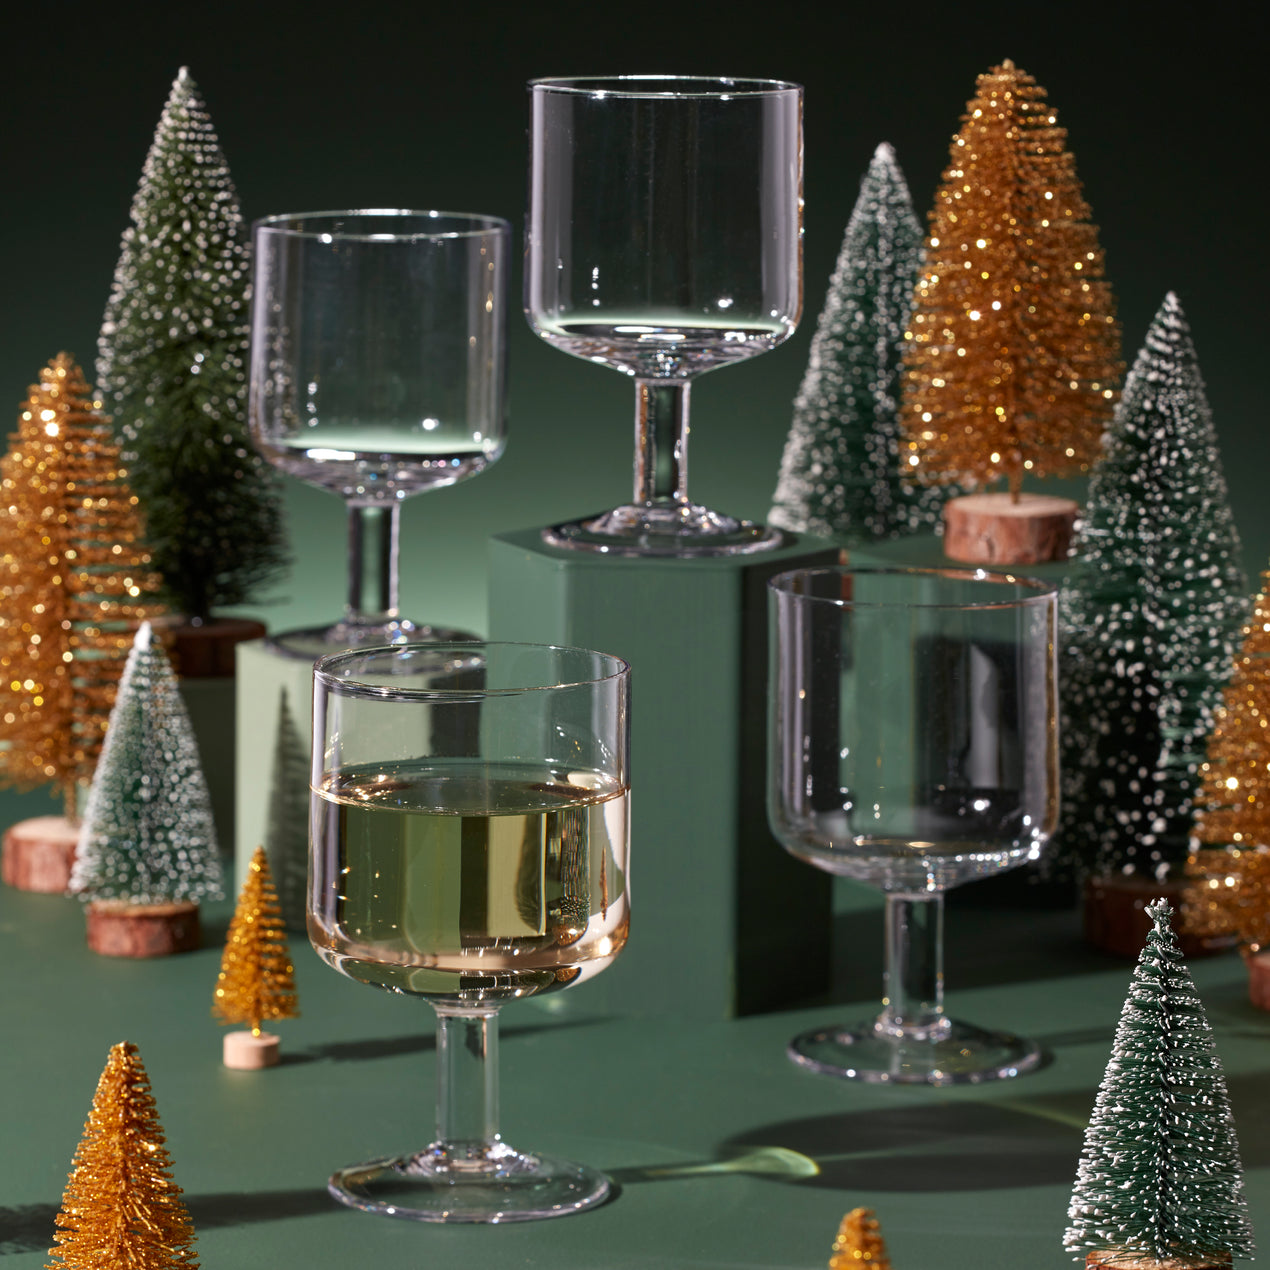 Stack N Go Portable Wine Glass Set - ShopFor20